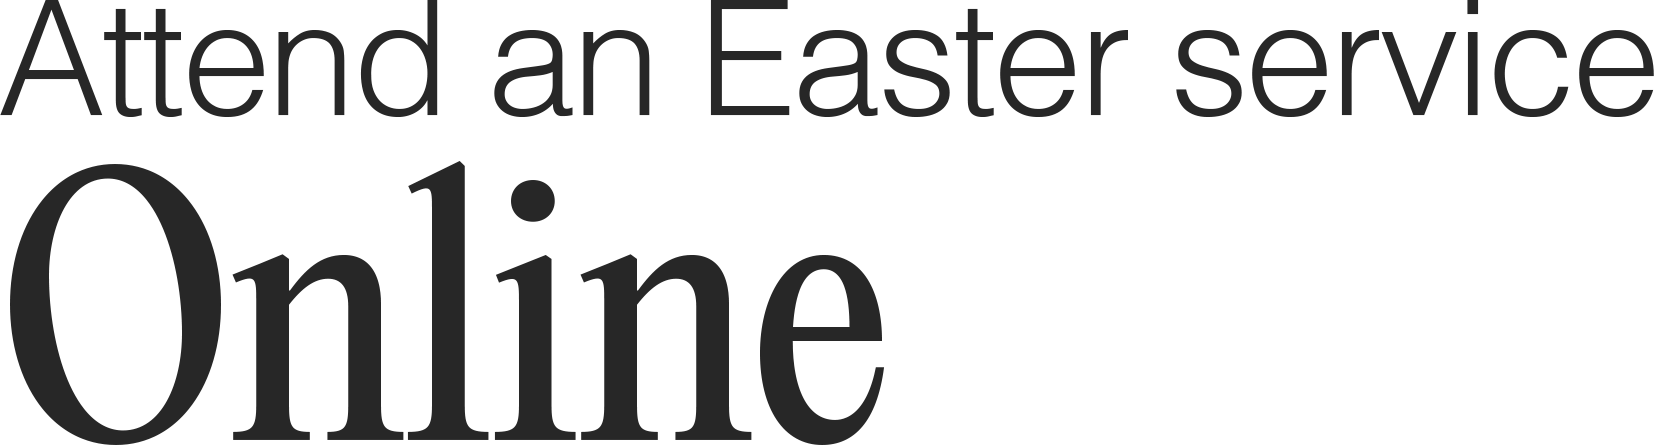 Attend an Easter service online